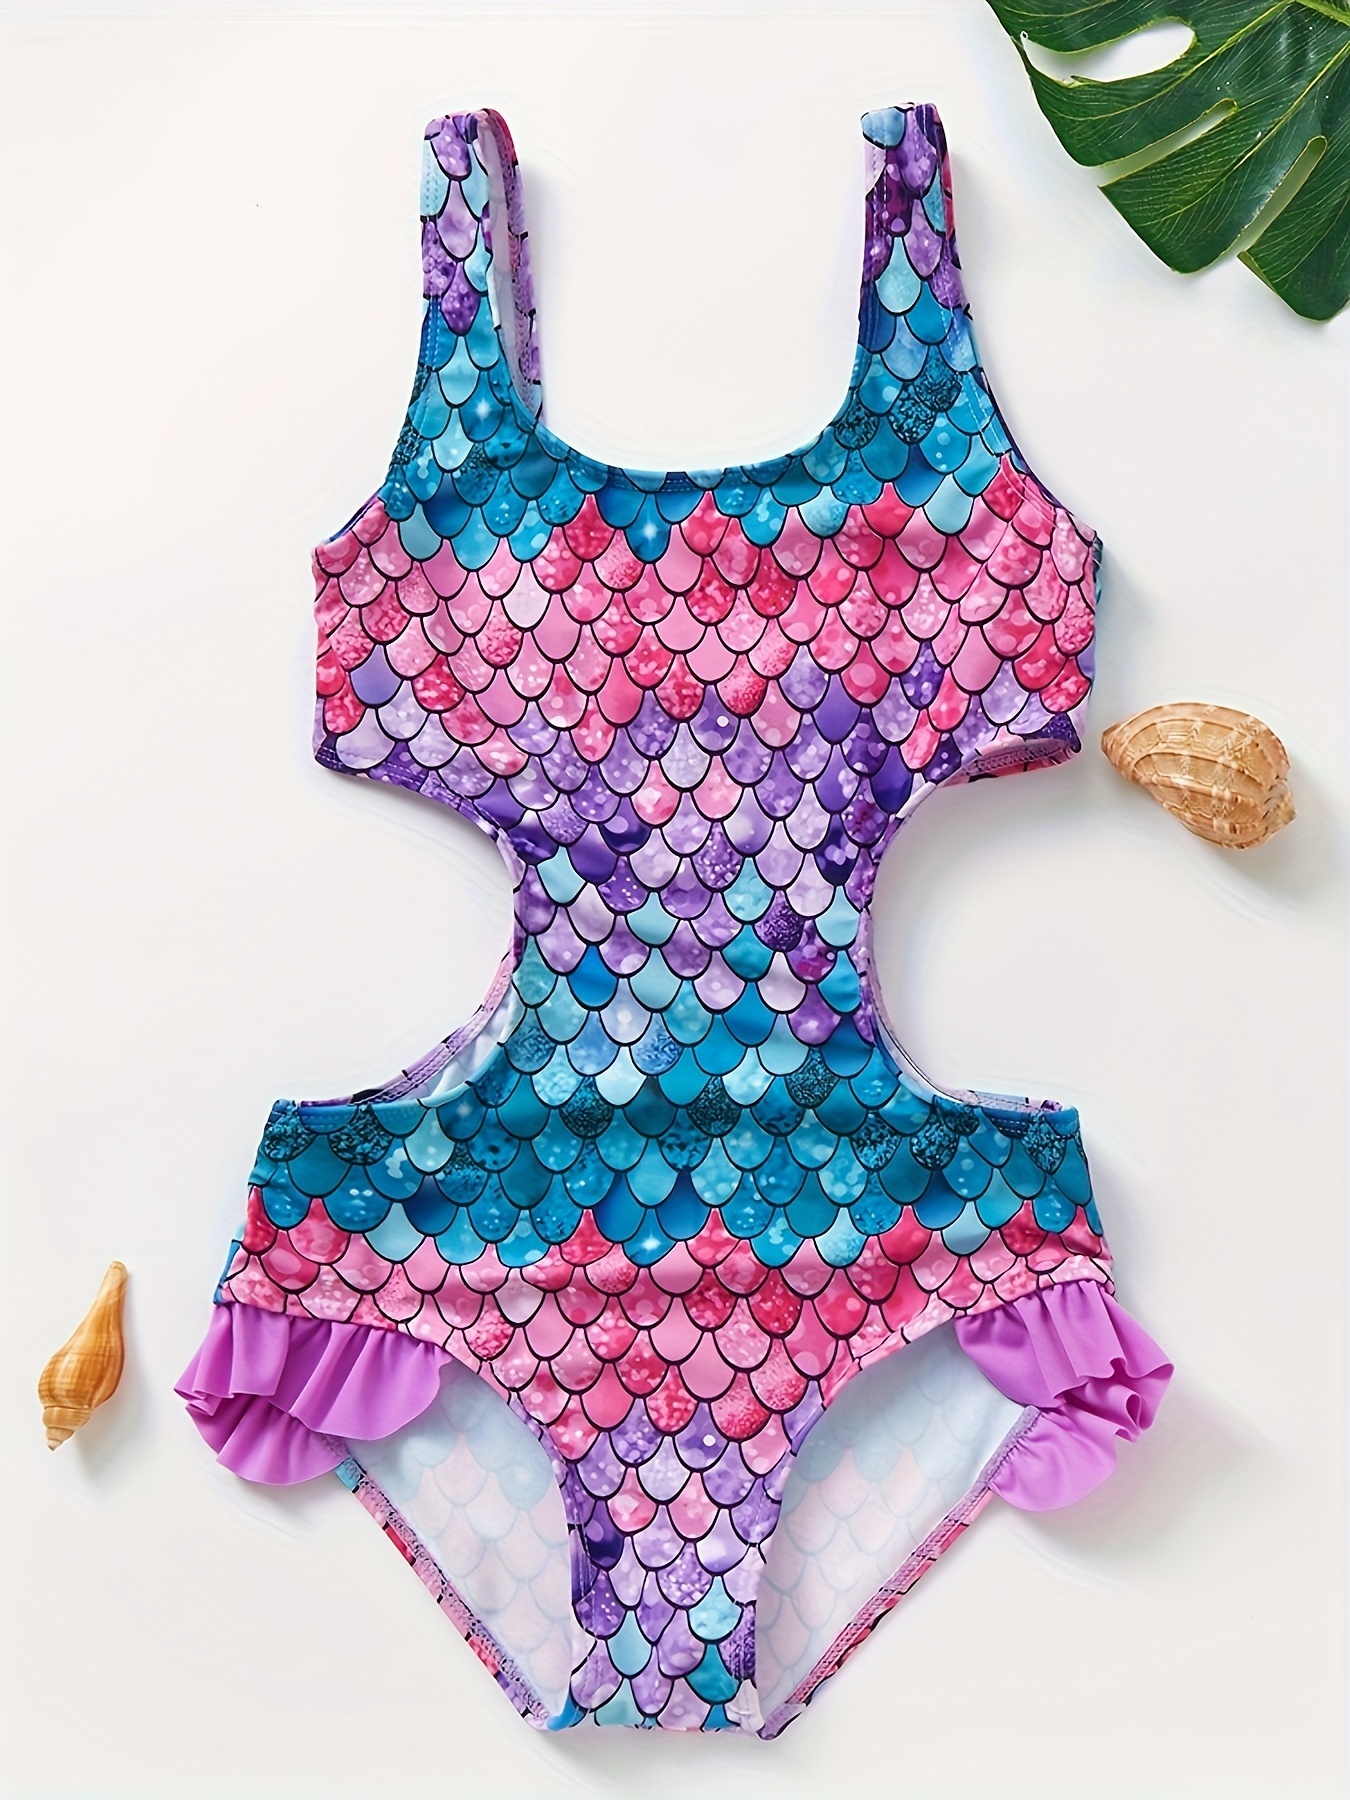 Girls' 2-Piece Leaf Printed Bikini Swimsuit Set for Kids, 5-14 Years